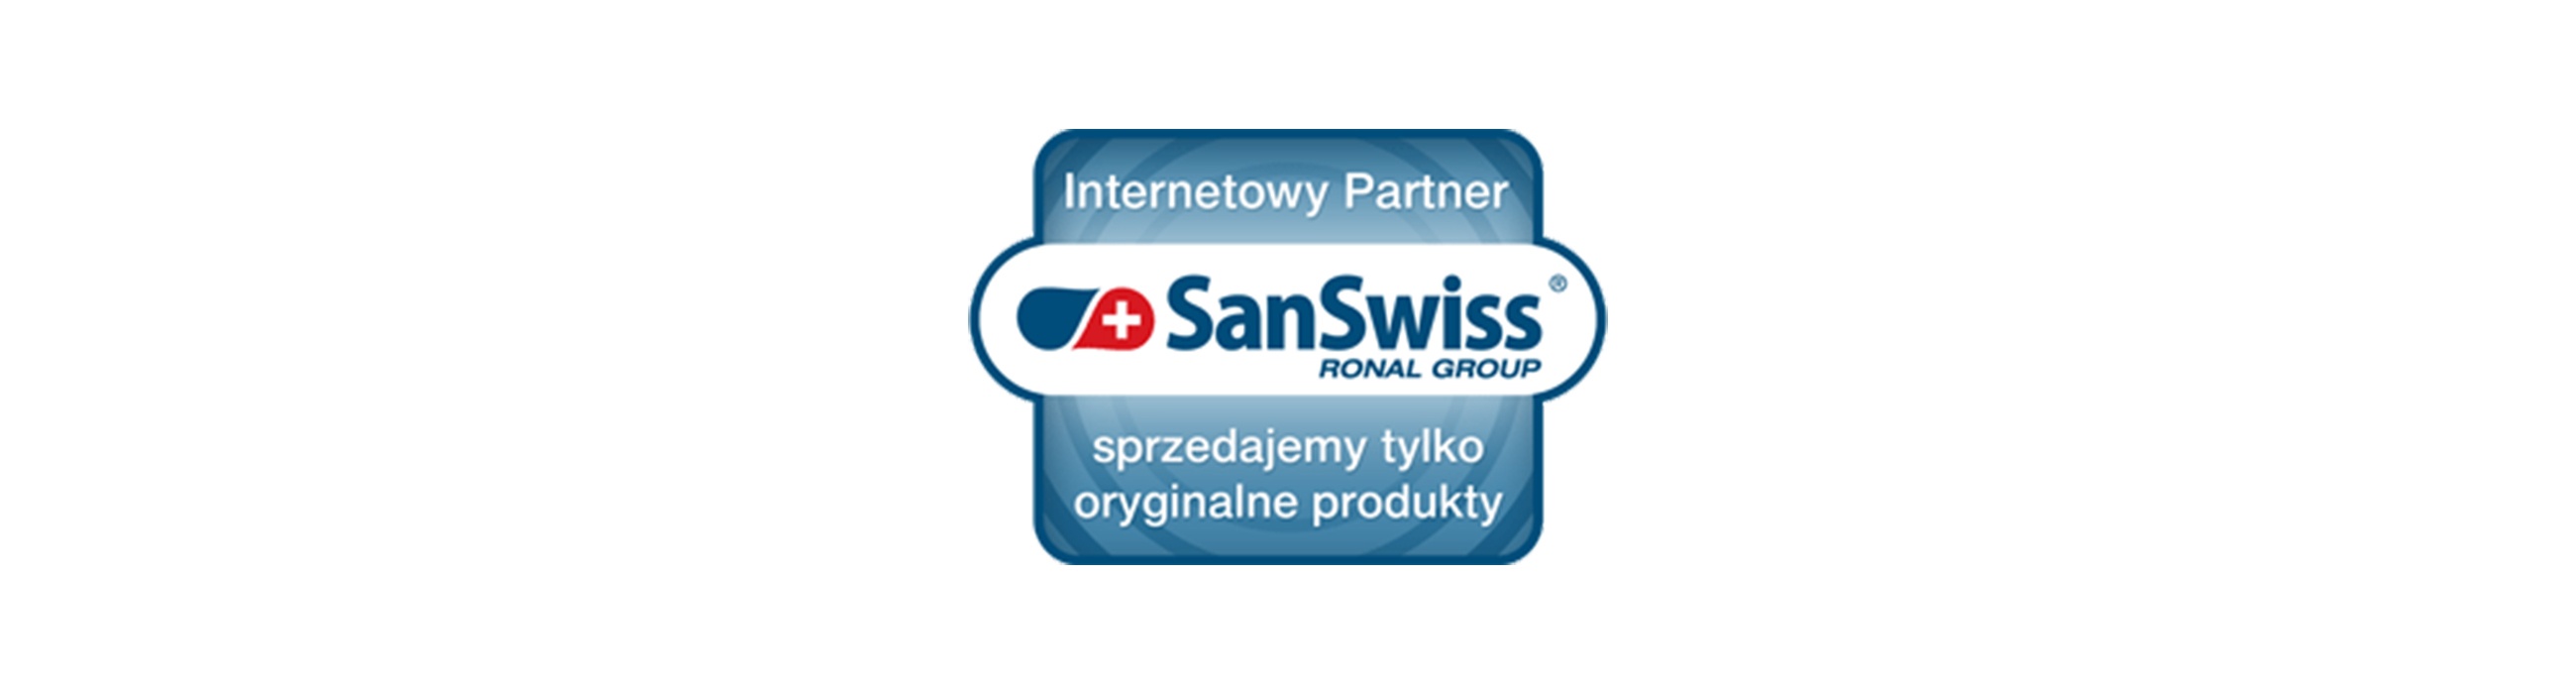 Sanswiss partner internetowy Łazienkarium.pl